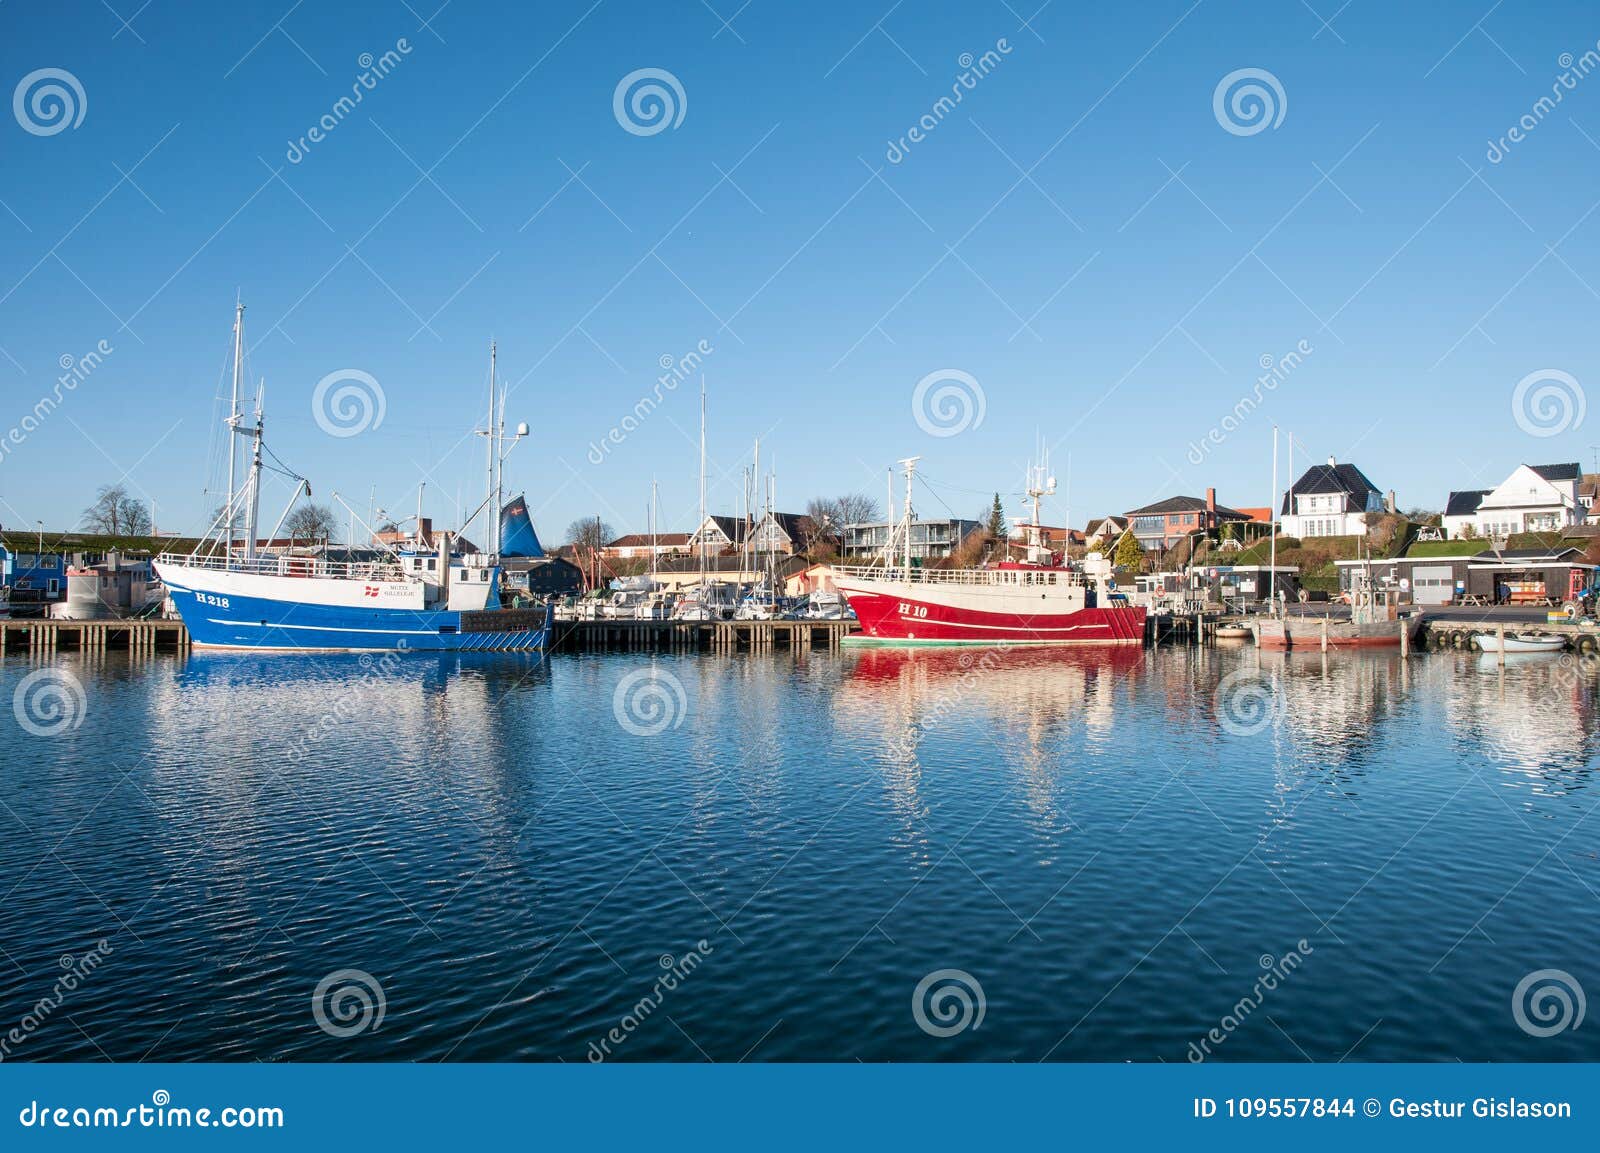 Danish fishing boat editorial stock image. Image of stevns 